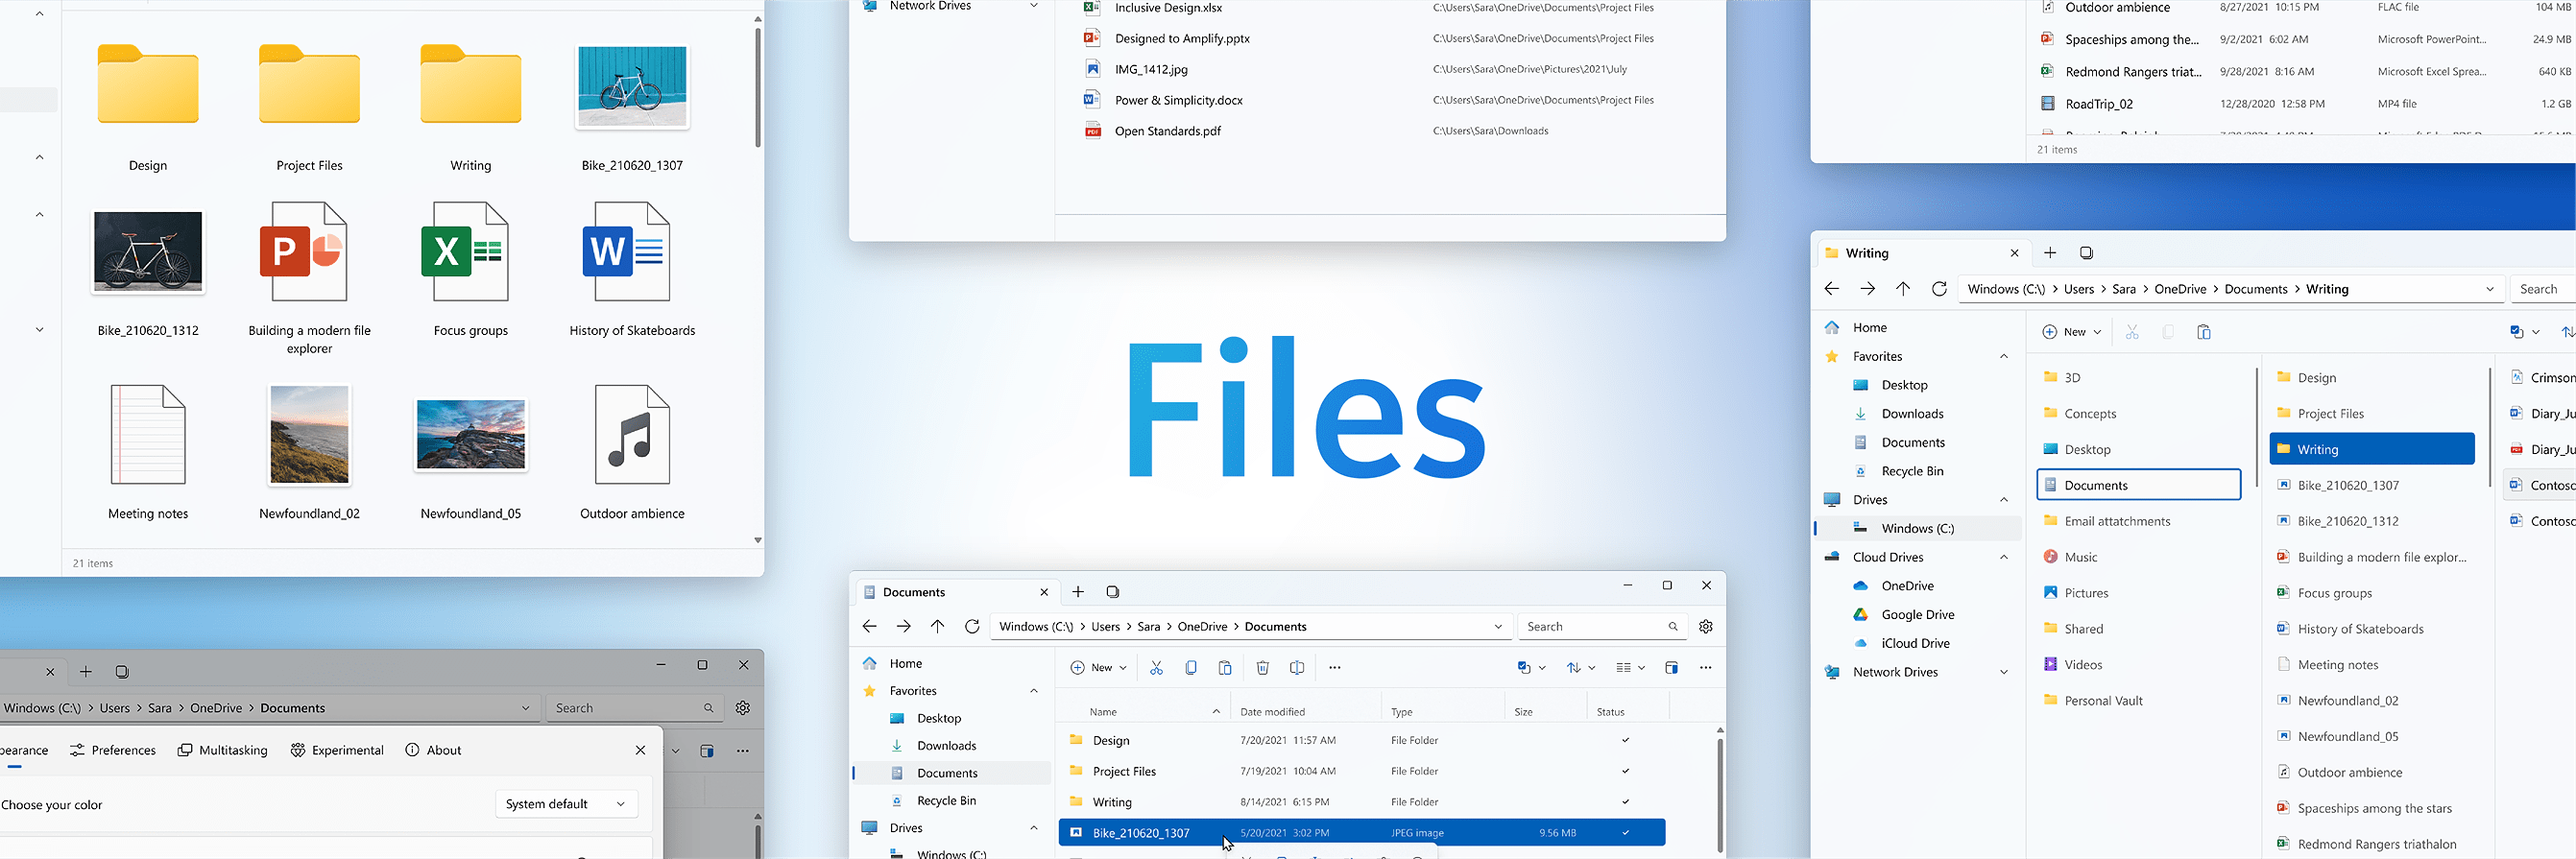 files-community/Files